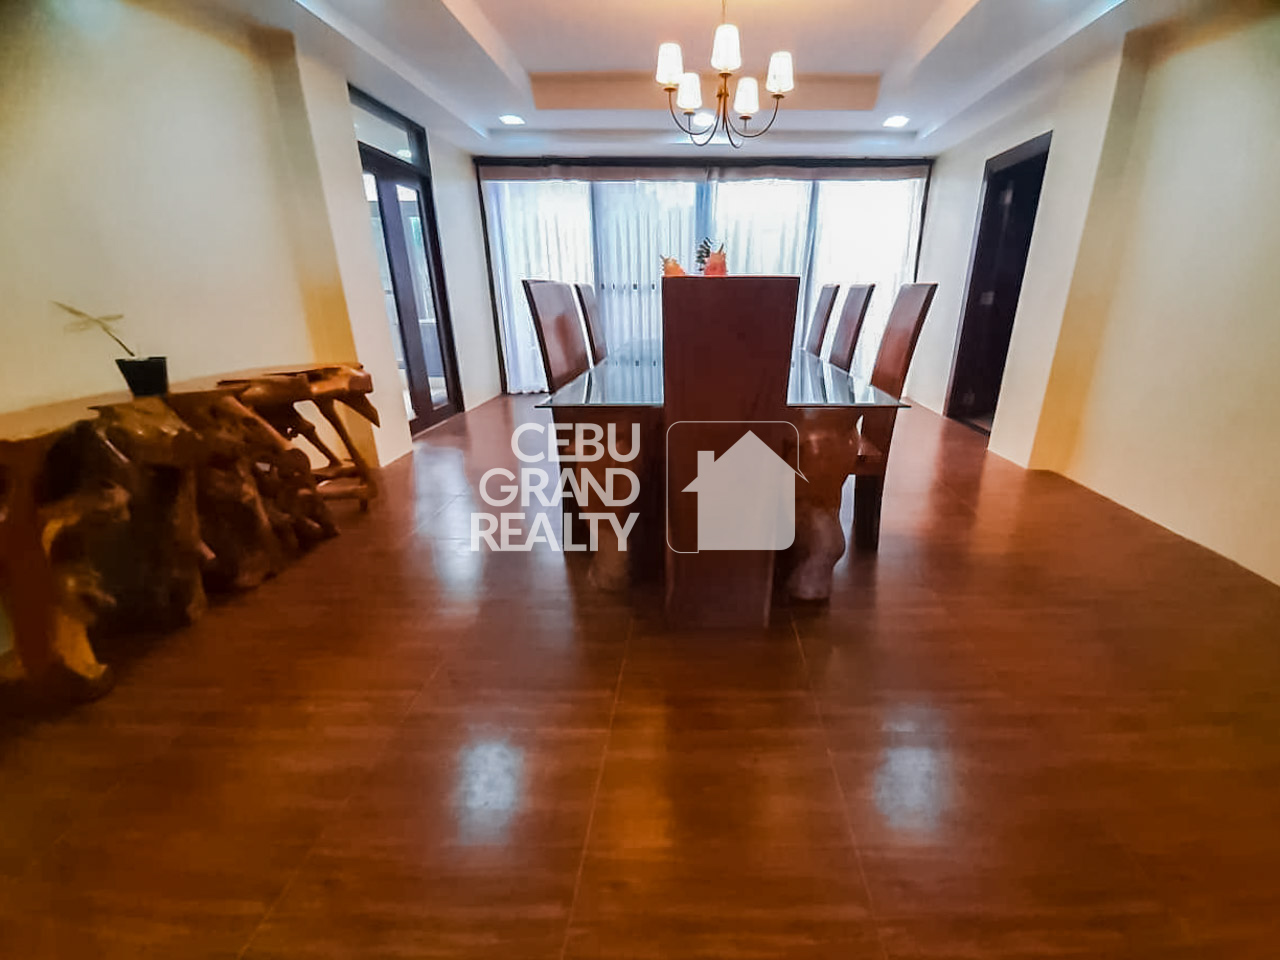 SRBAM3 6 Bedroom House for Sale in Amara Liloan - Cebu Grand Realty (5)